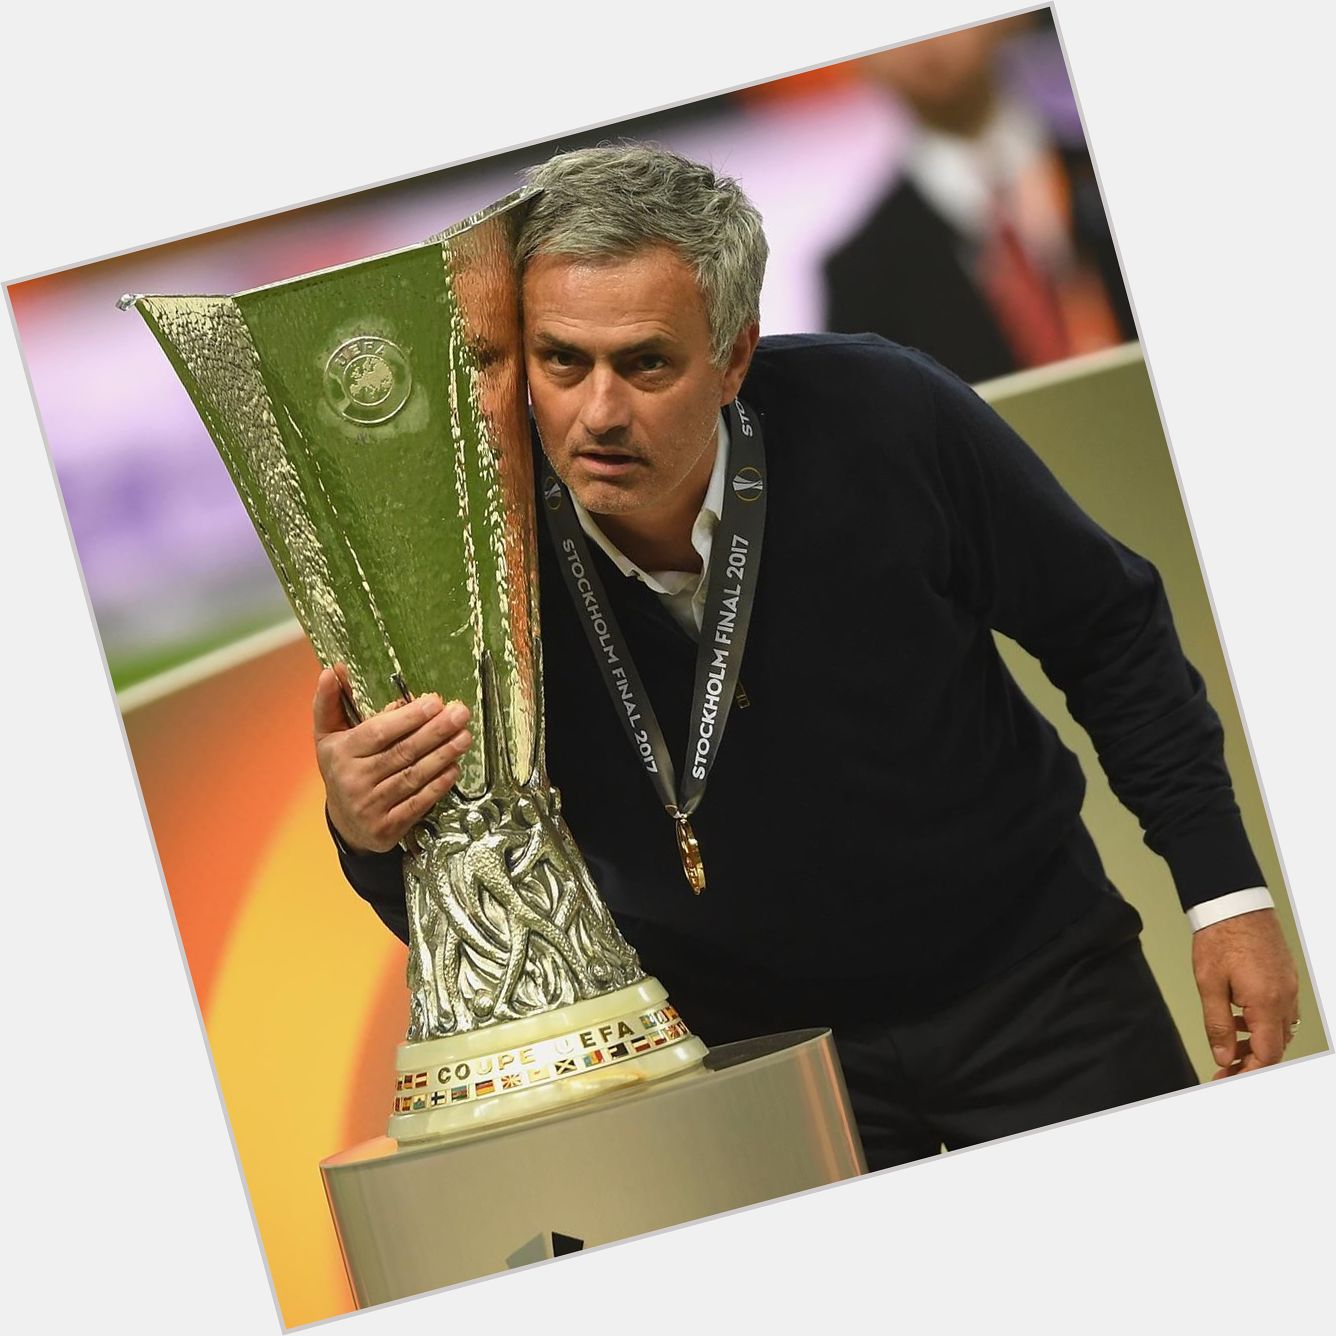 Happy birthday, Jose Mourinho! One of the best managers around. 